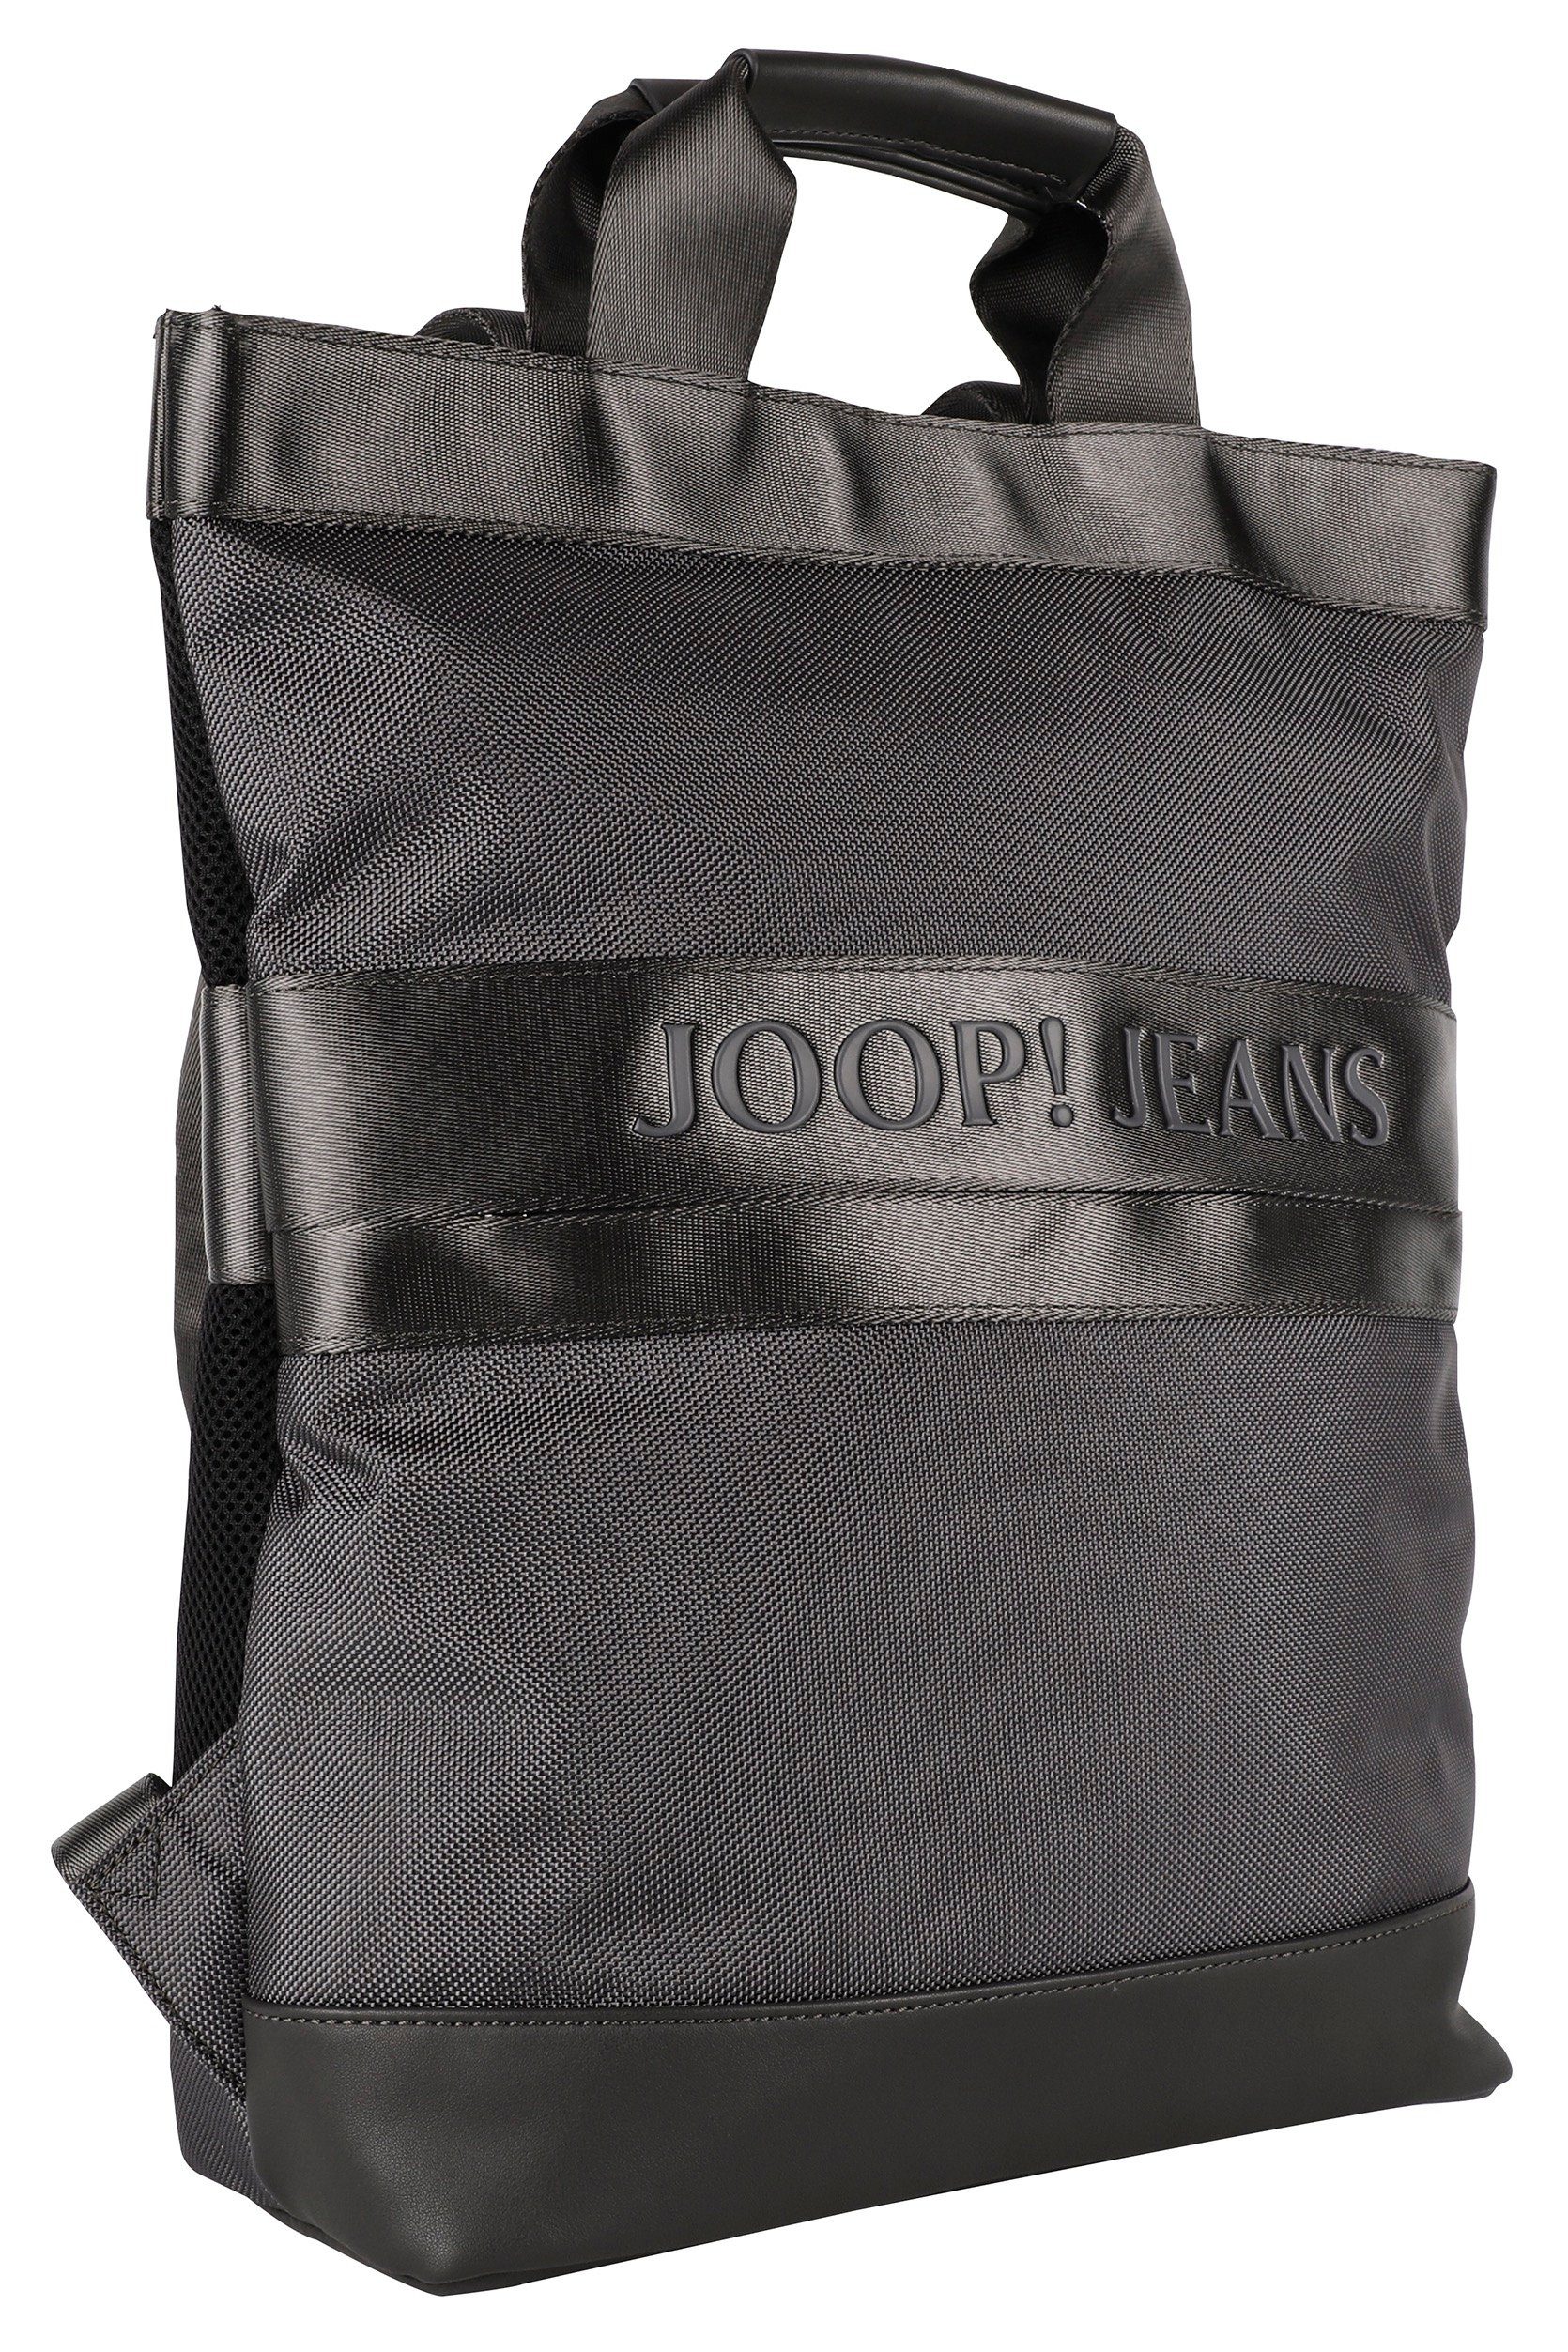 Joop Jeans Cityrucksack modica svz, falk dunkelgrau backpack Reißverschluss-Vortasche mit